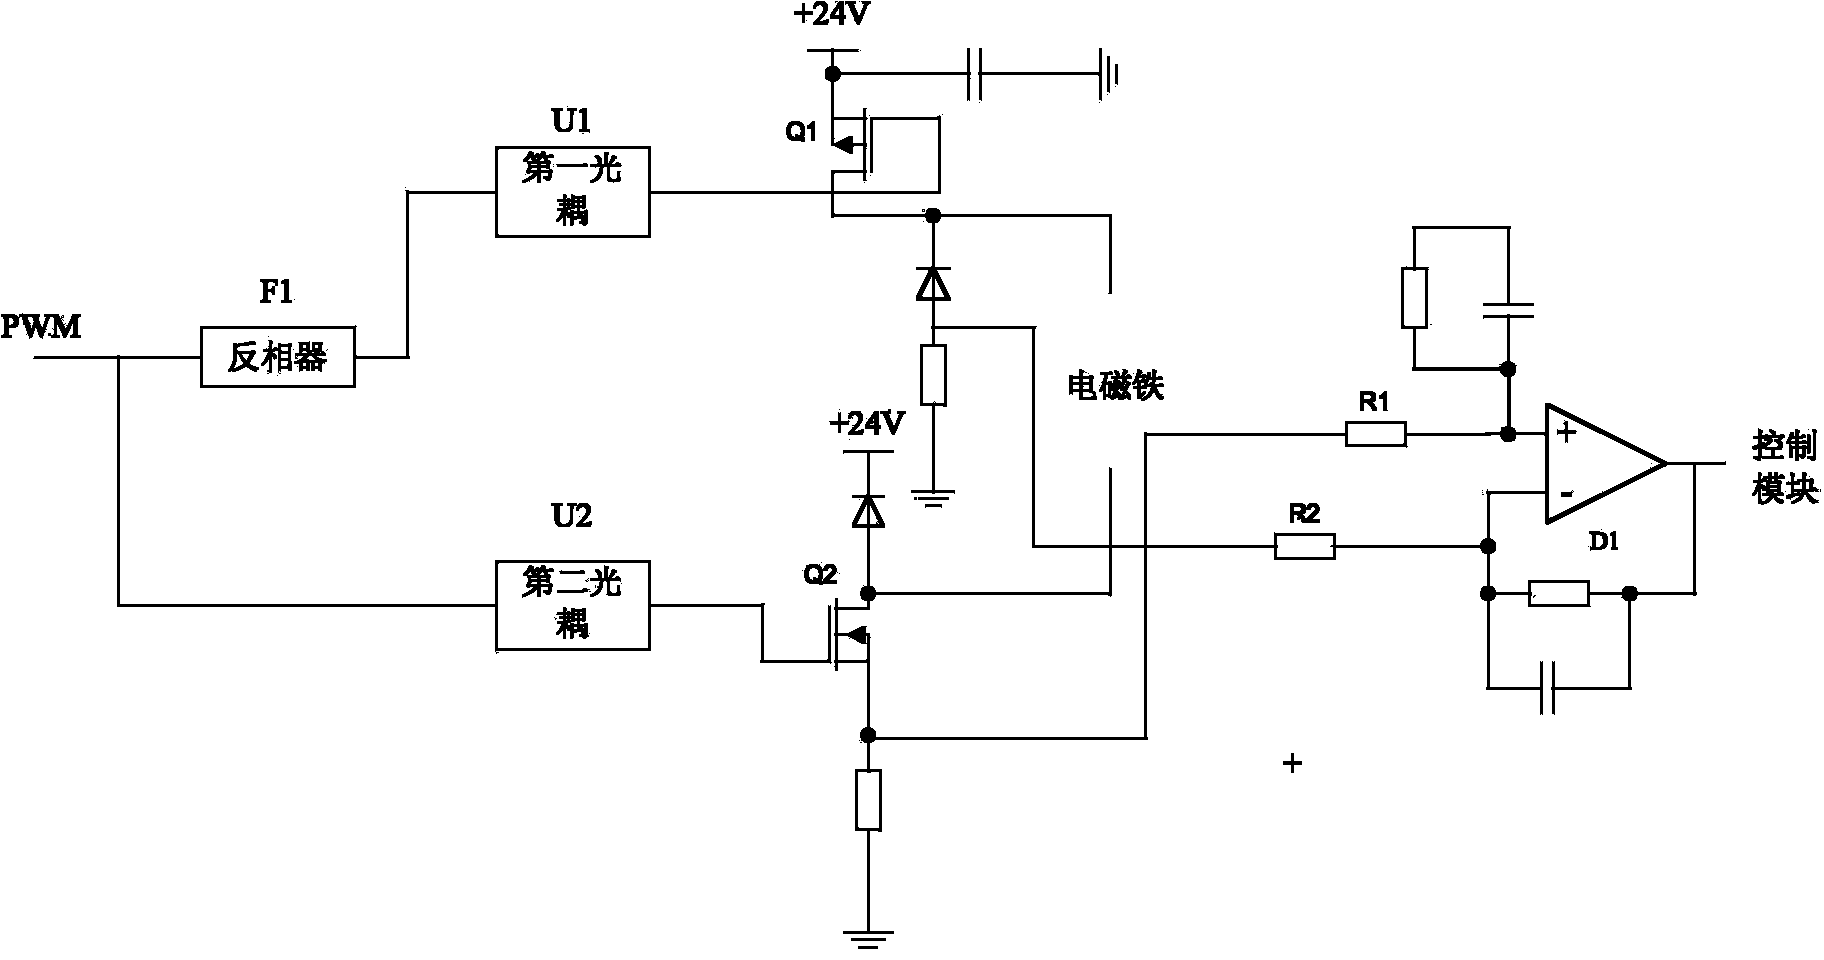 Proportional amplifier PID parameter self-tuning control method, and proportional amplifier and proportional electromagnetic valve